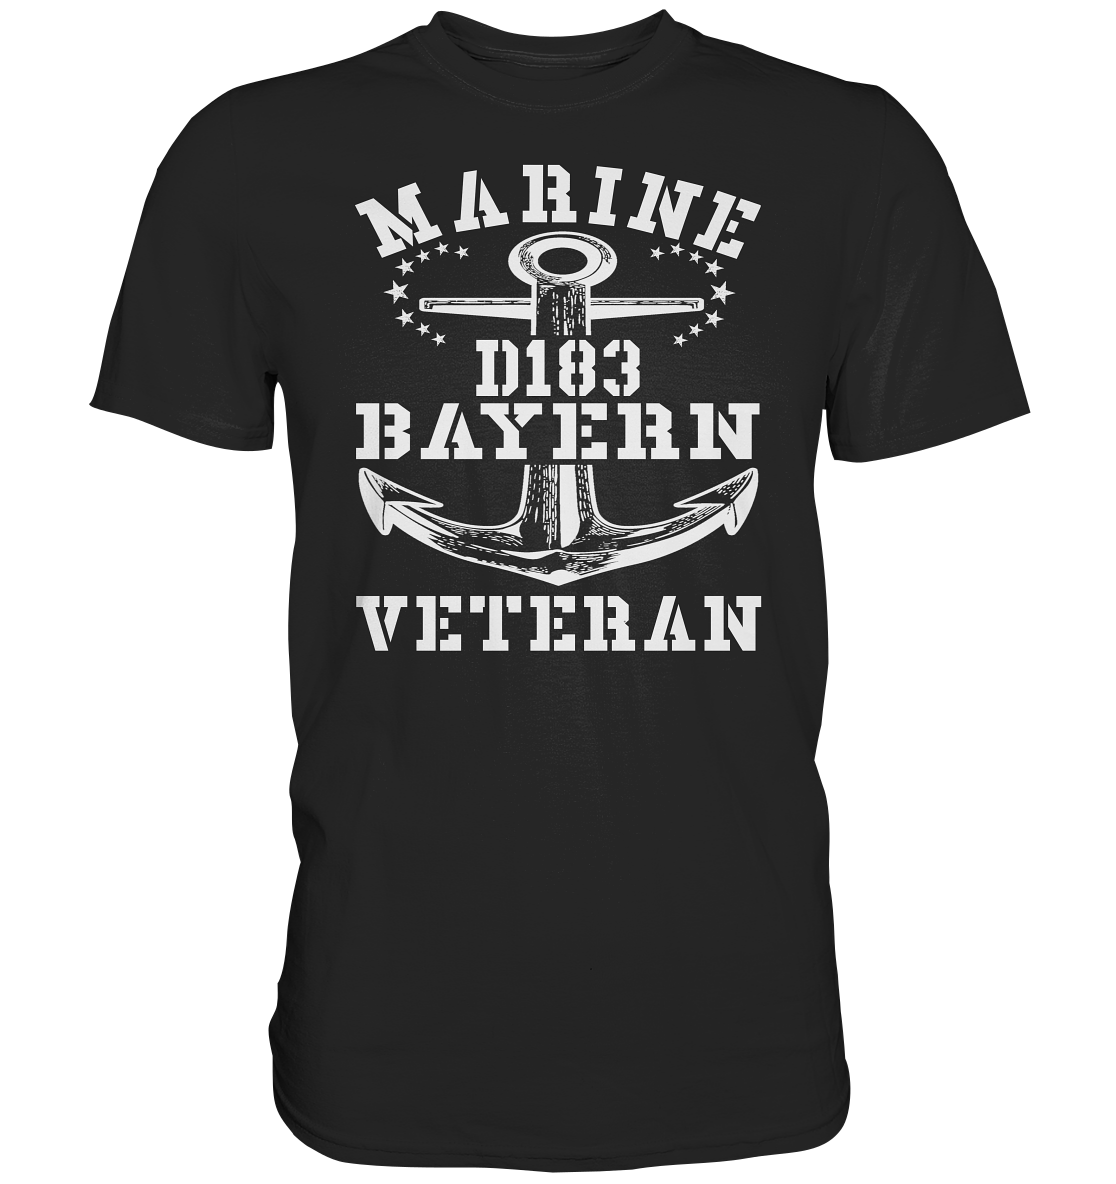 Zerstörer D183 BAYERN Marine Veteran - Premium Shirt